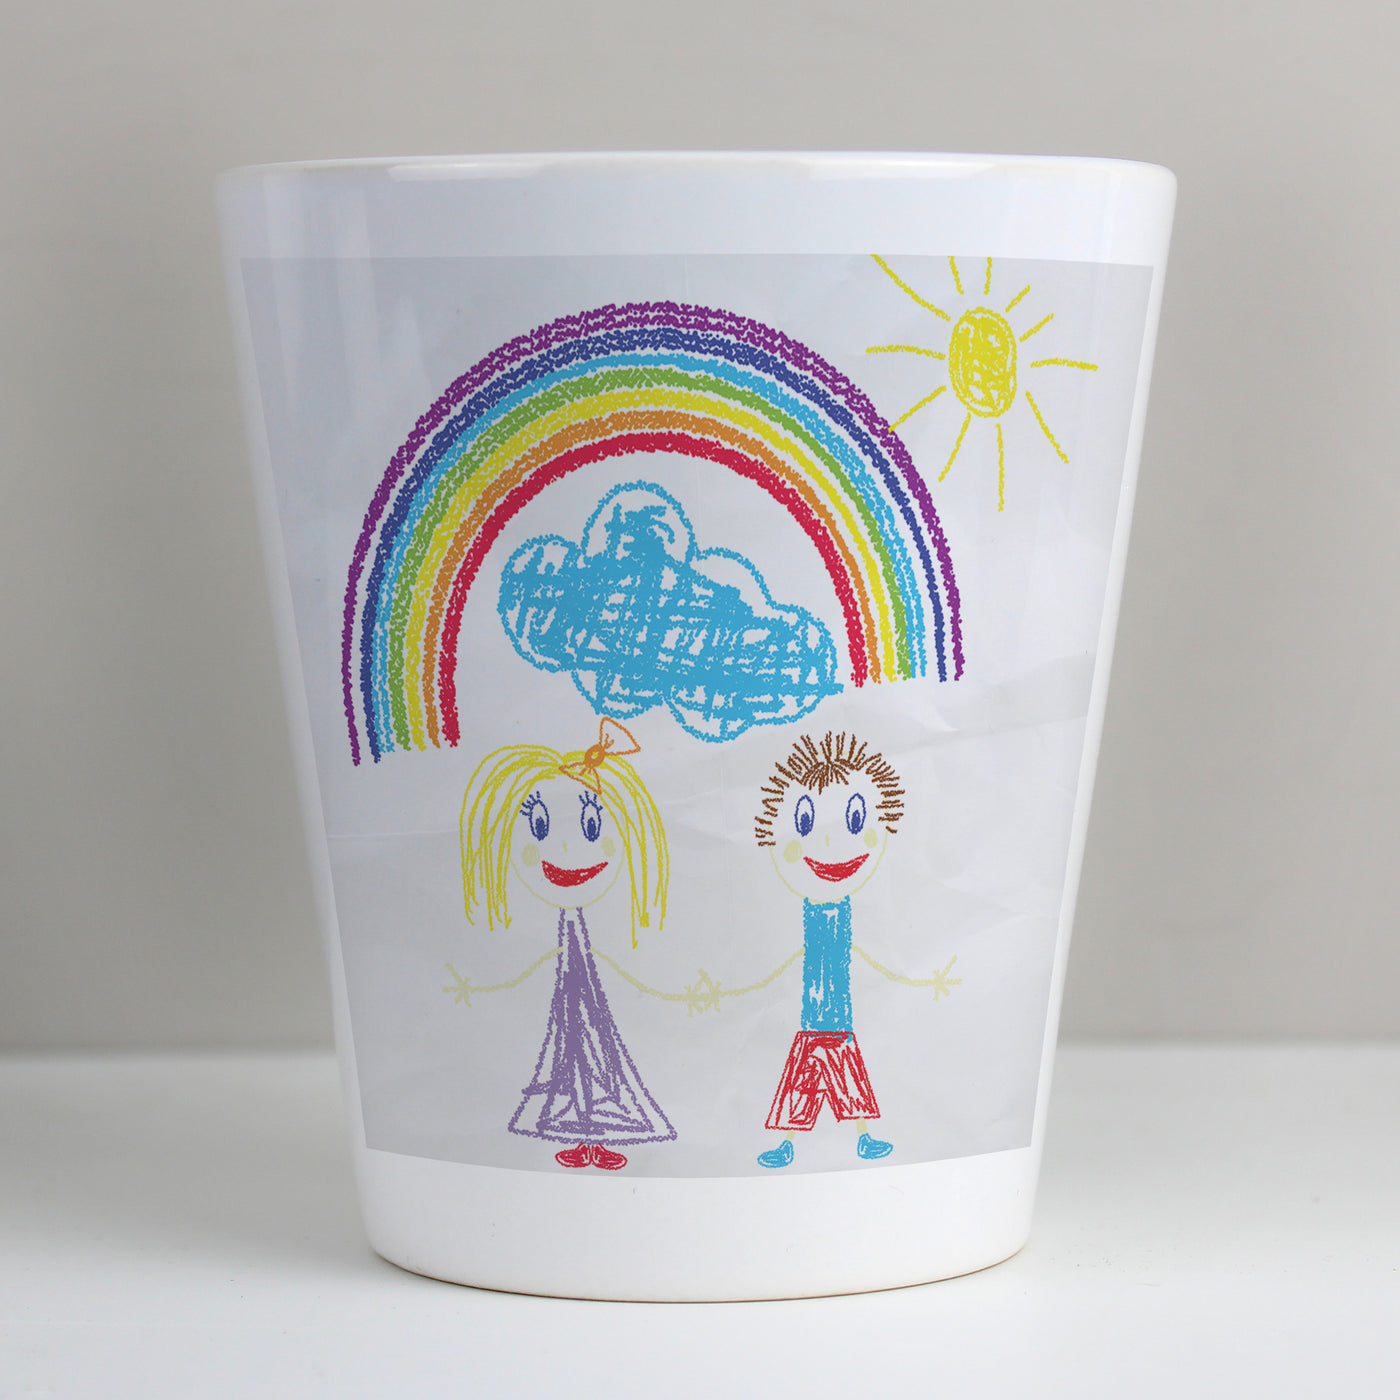 Personalised Childrens Drawing Photo Upload Ceramic Plant Pot